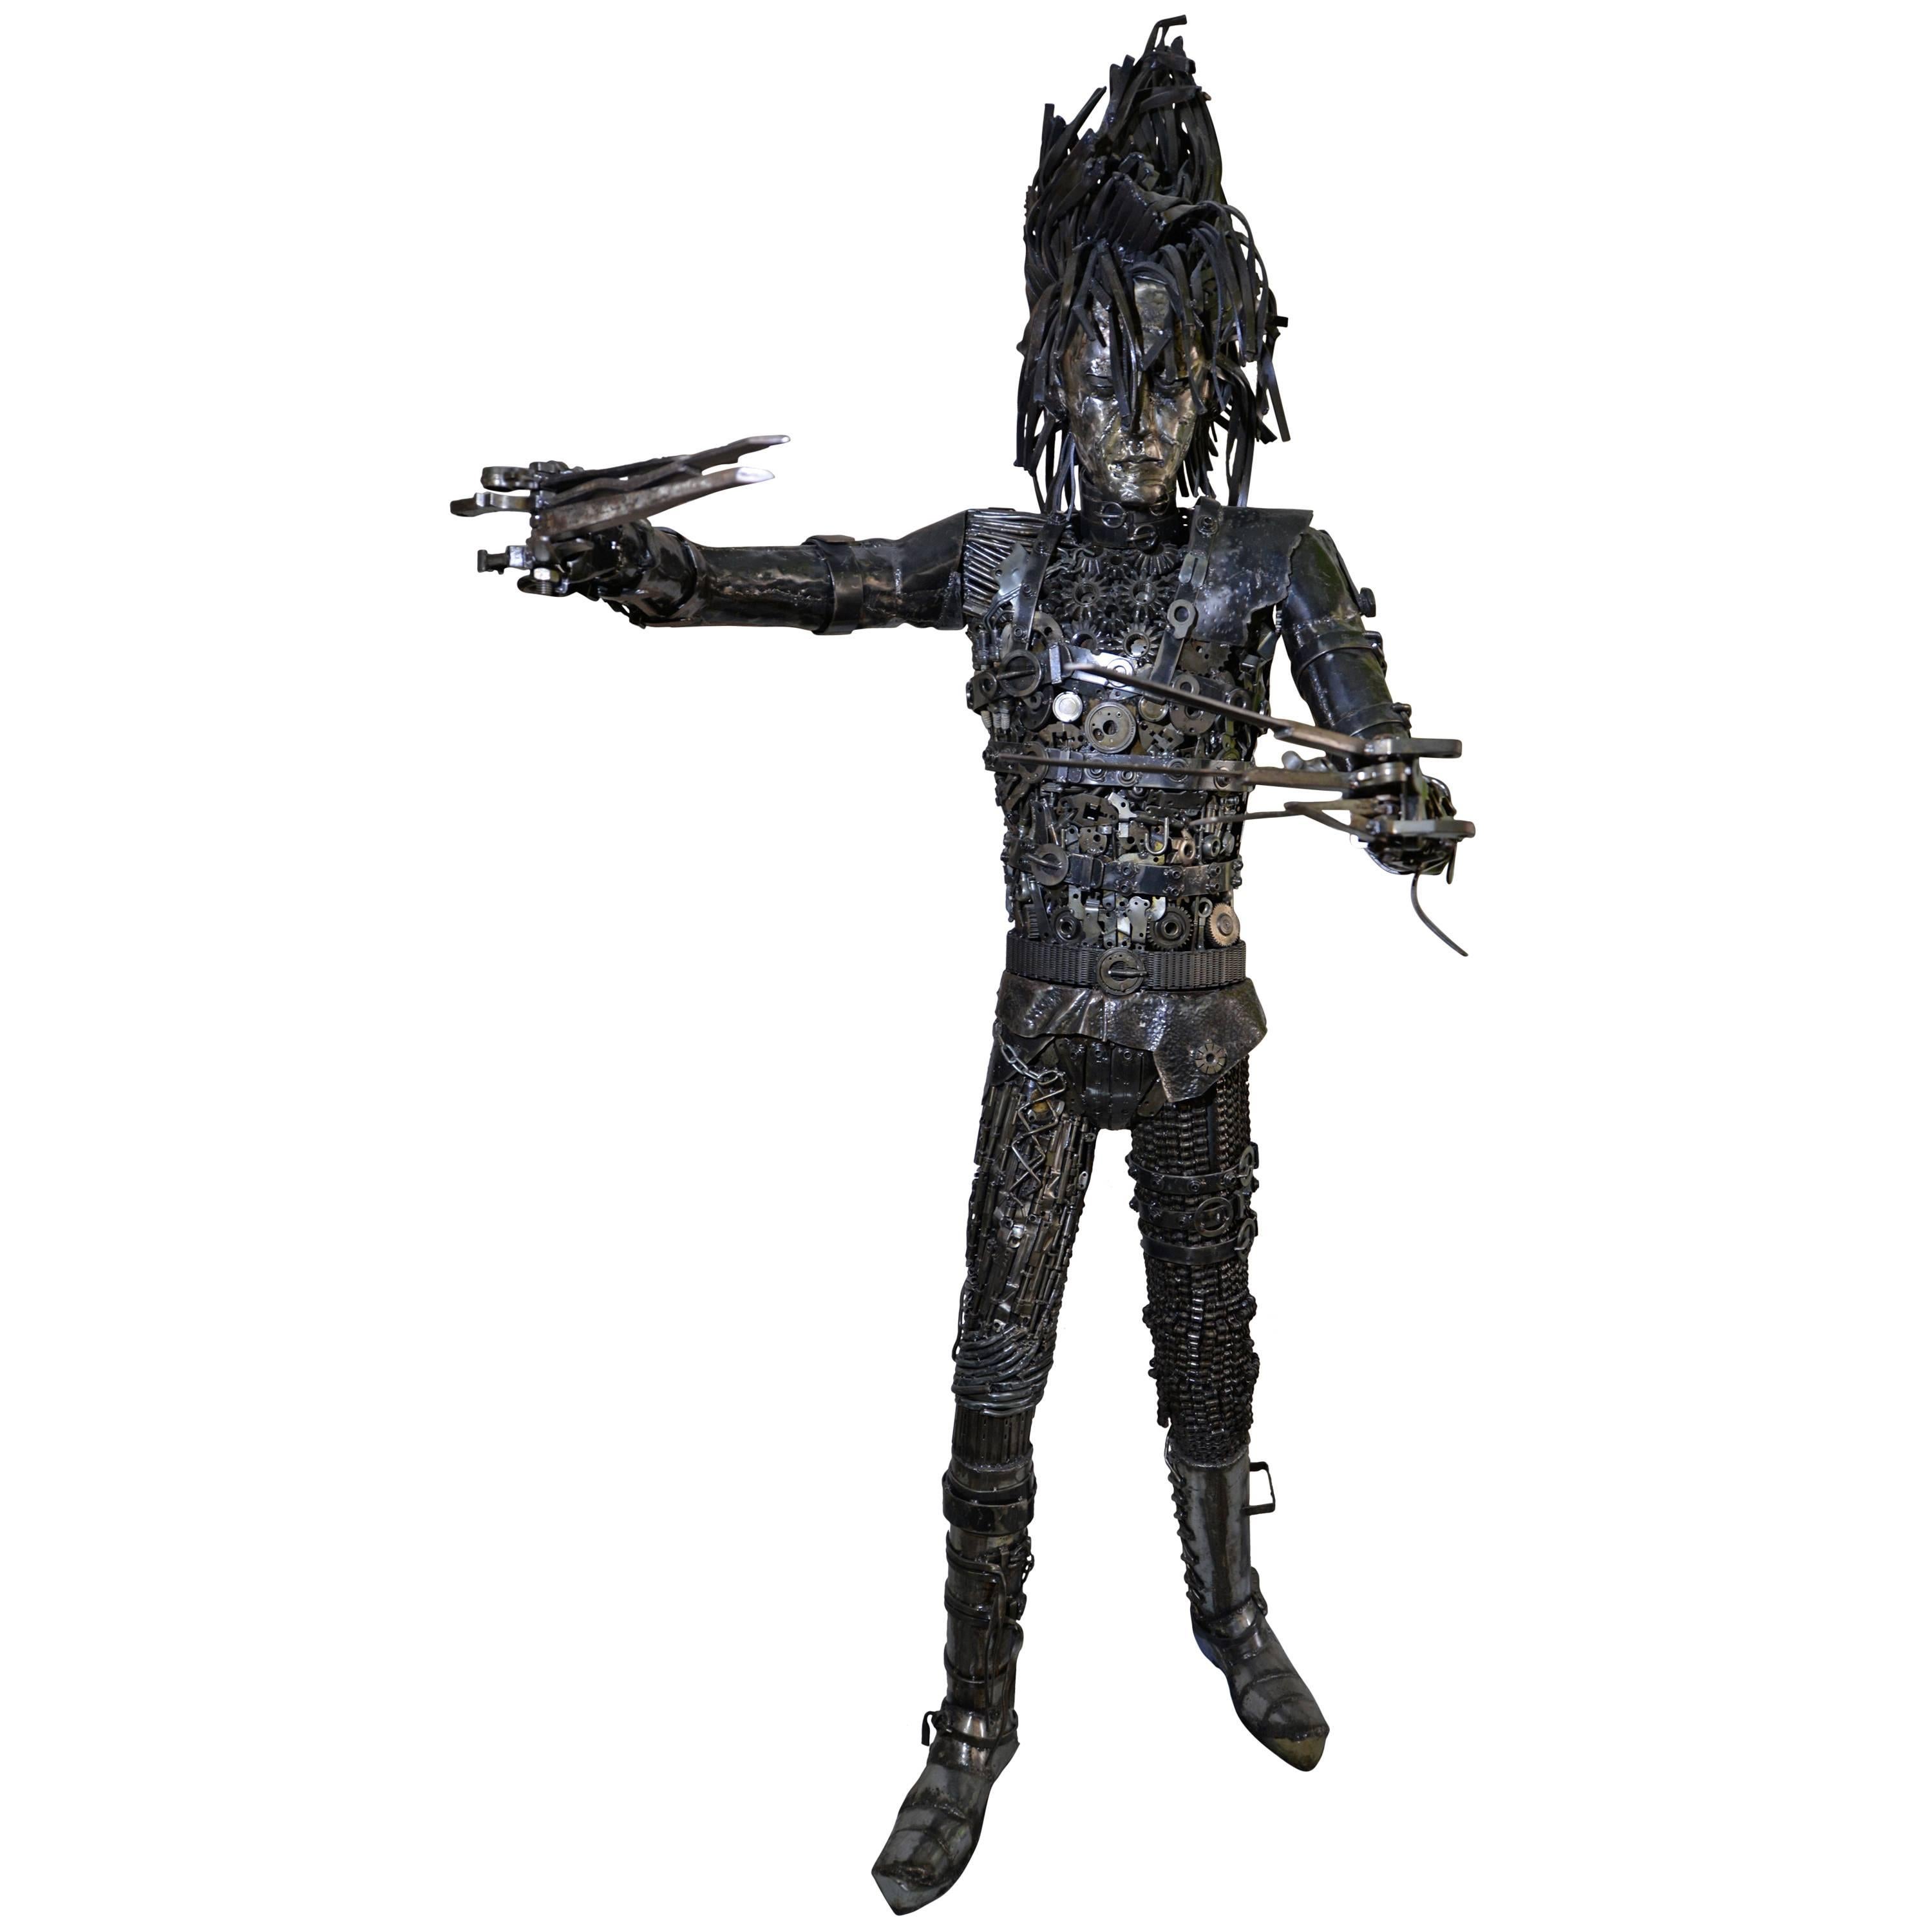 Lifesize Edward Scissorhands Metal Sculpture For Sale